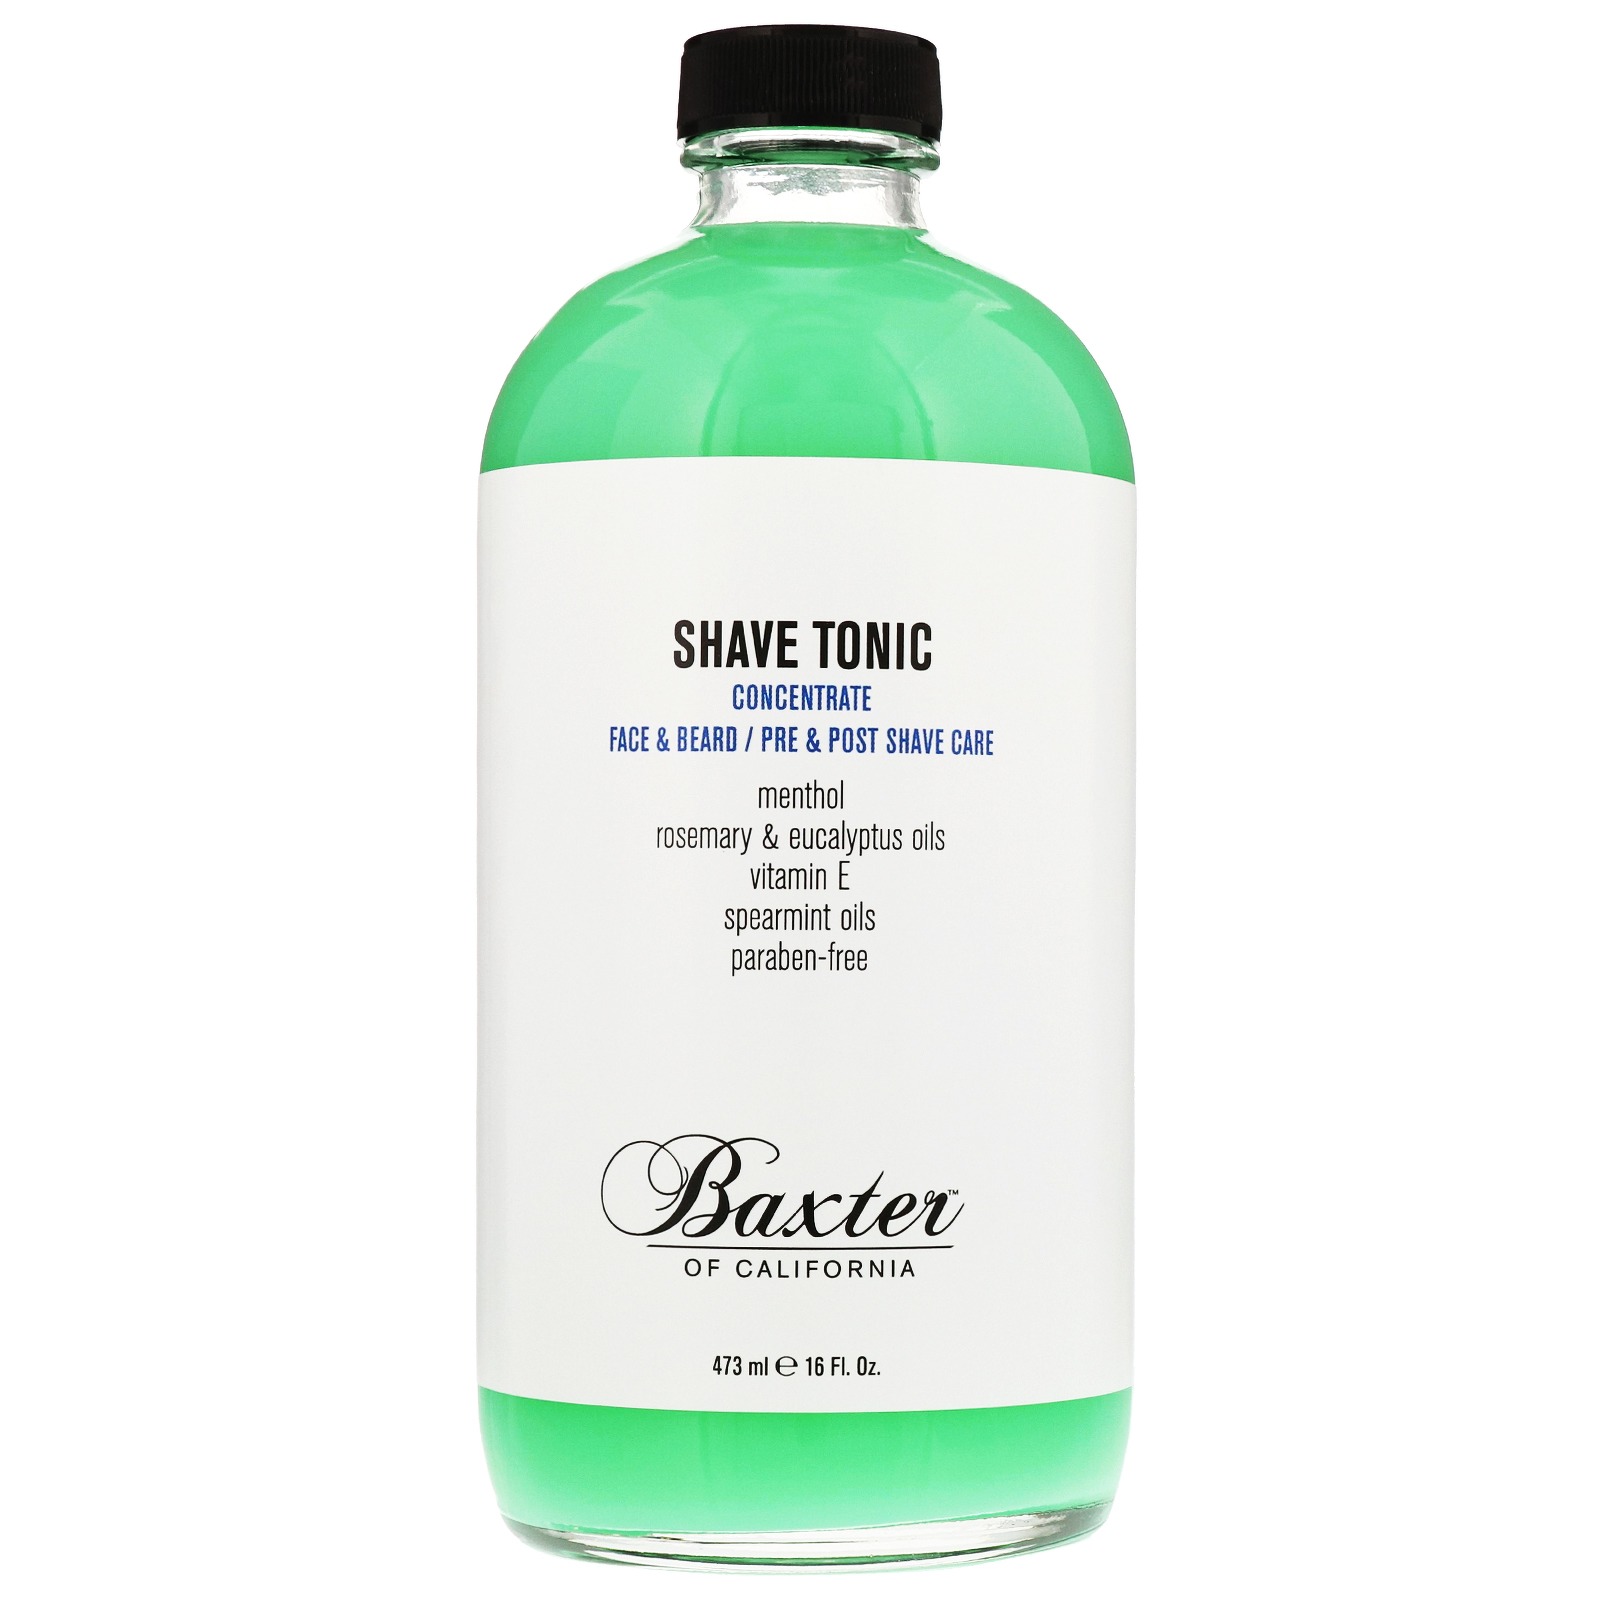 Shave tonic baxter caresource medicaid application